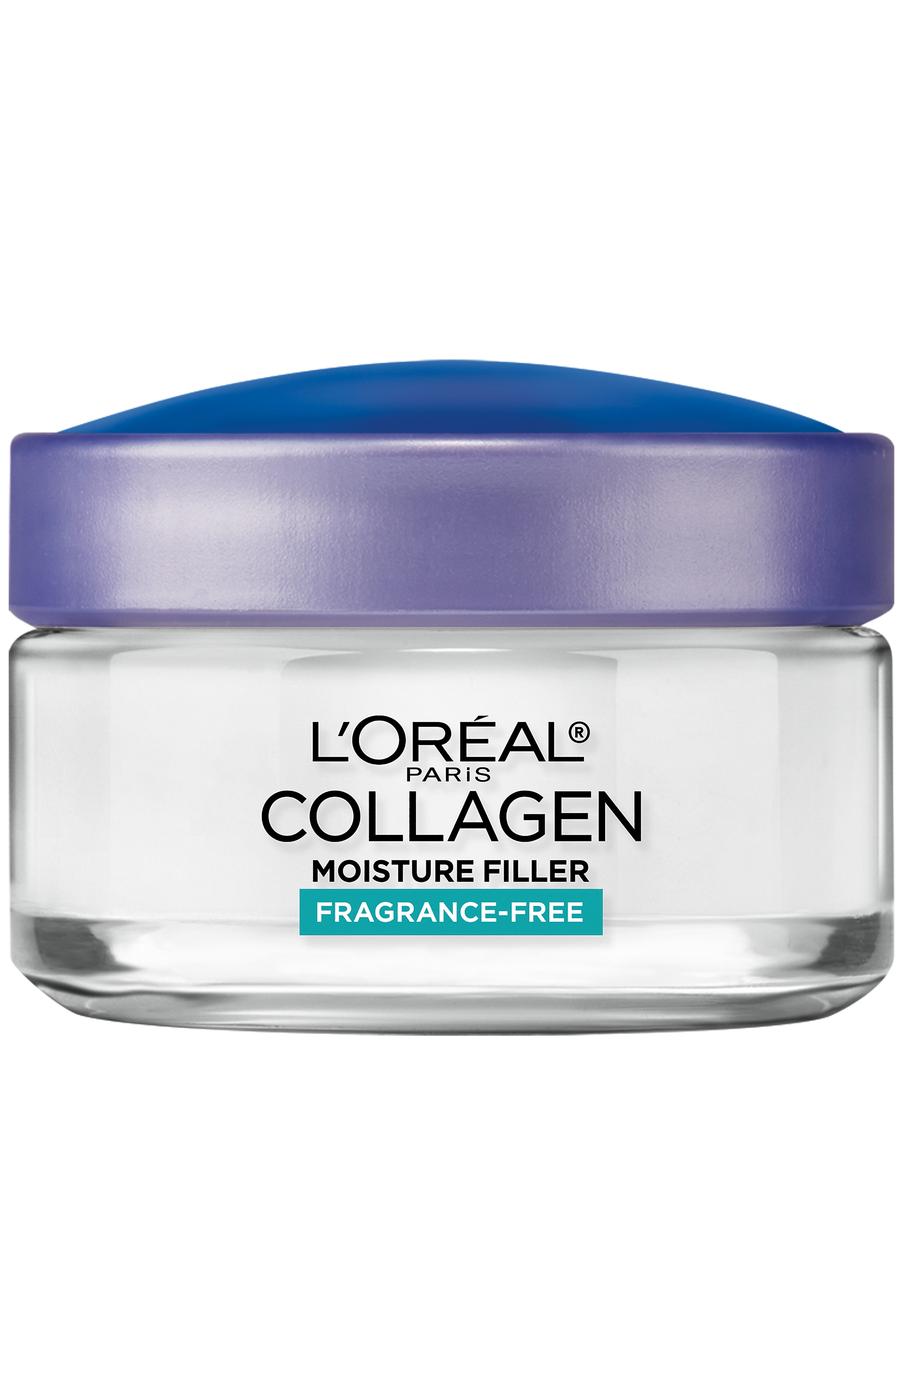 L'Oréal Paris Collagen Moisture Filler Facial Day Cream Fragrance Free; image 4 of 6